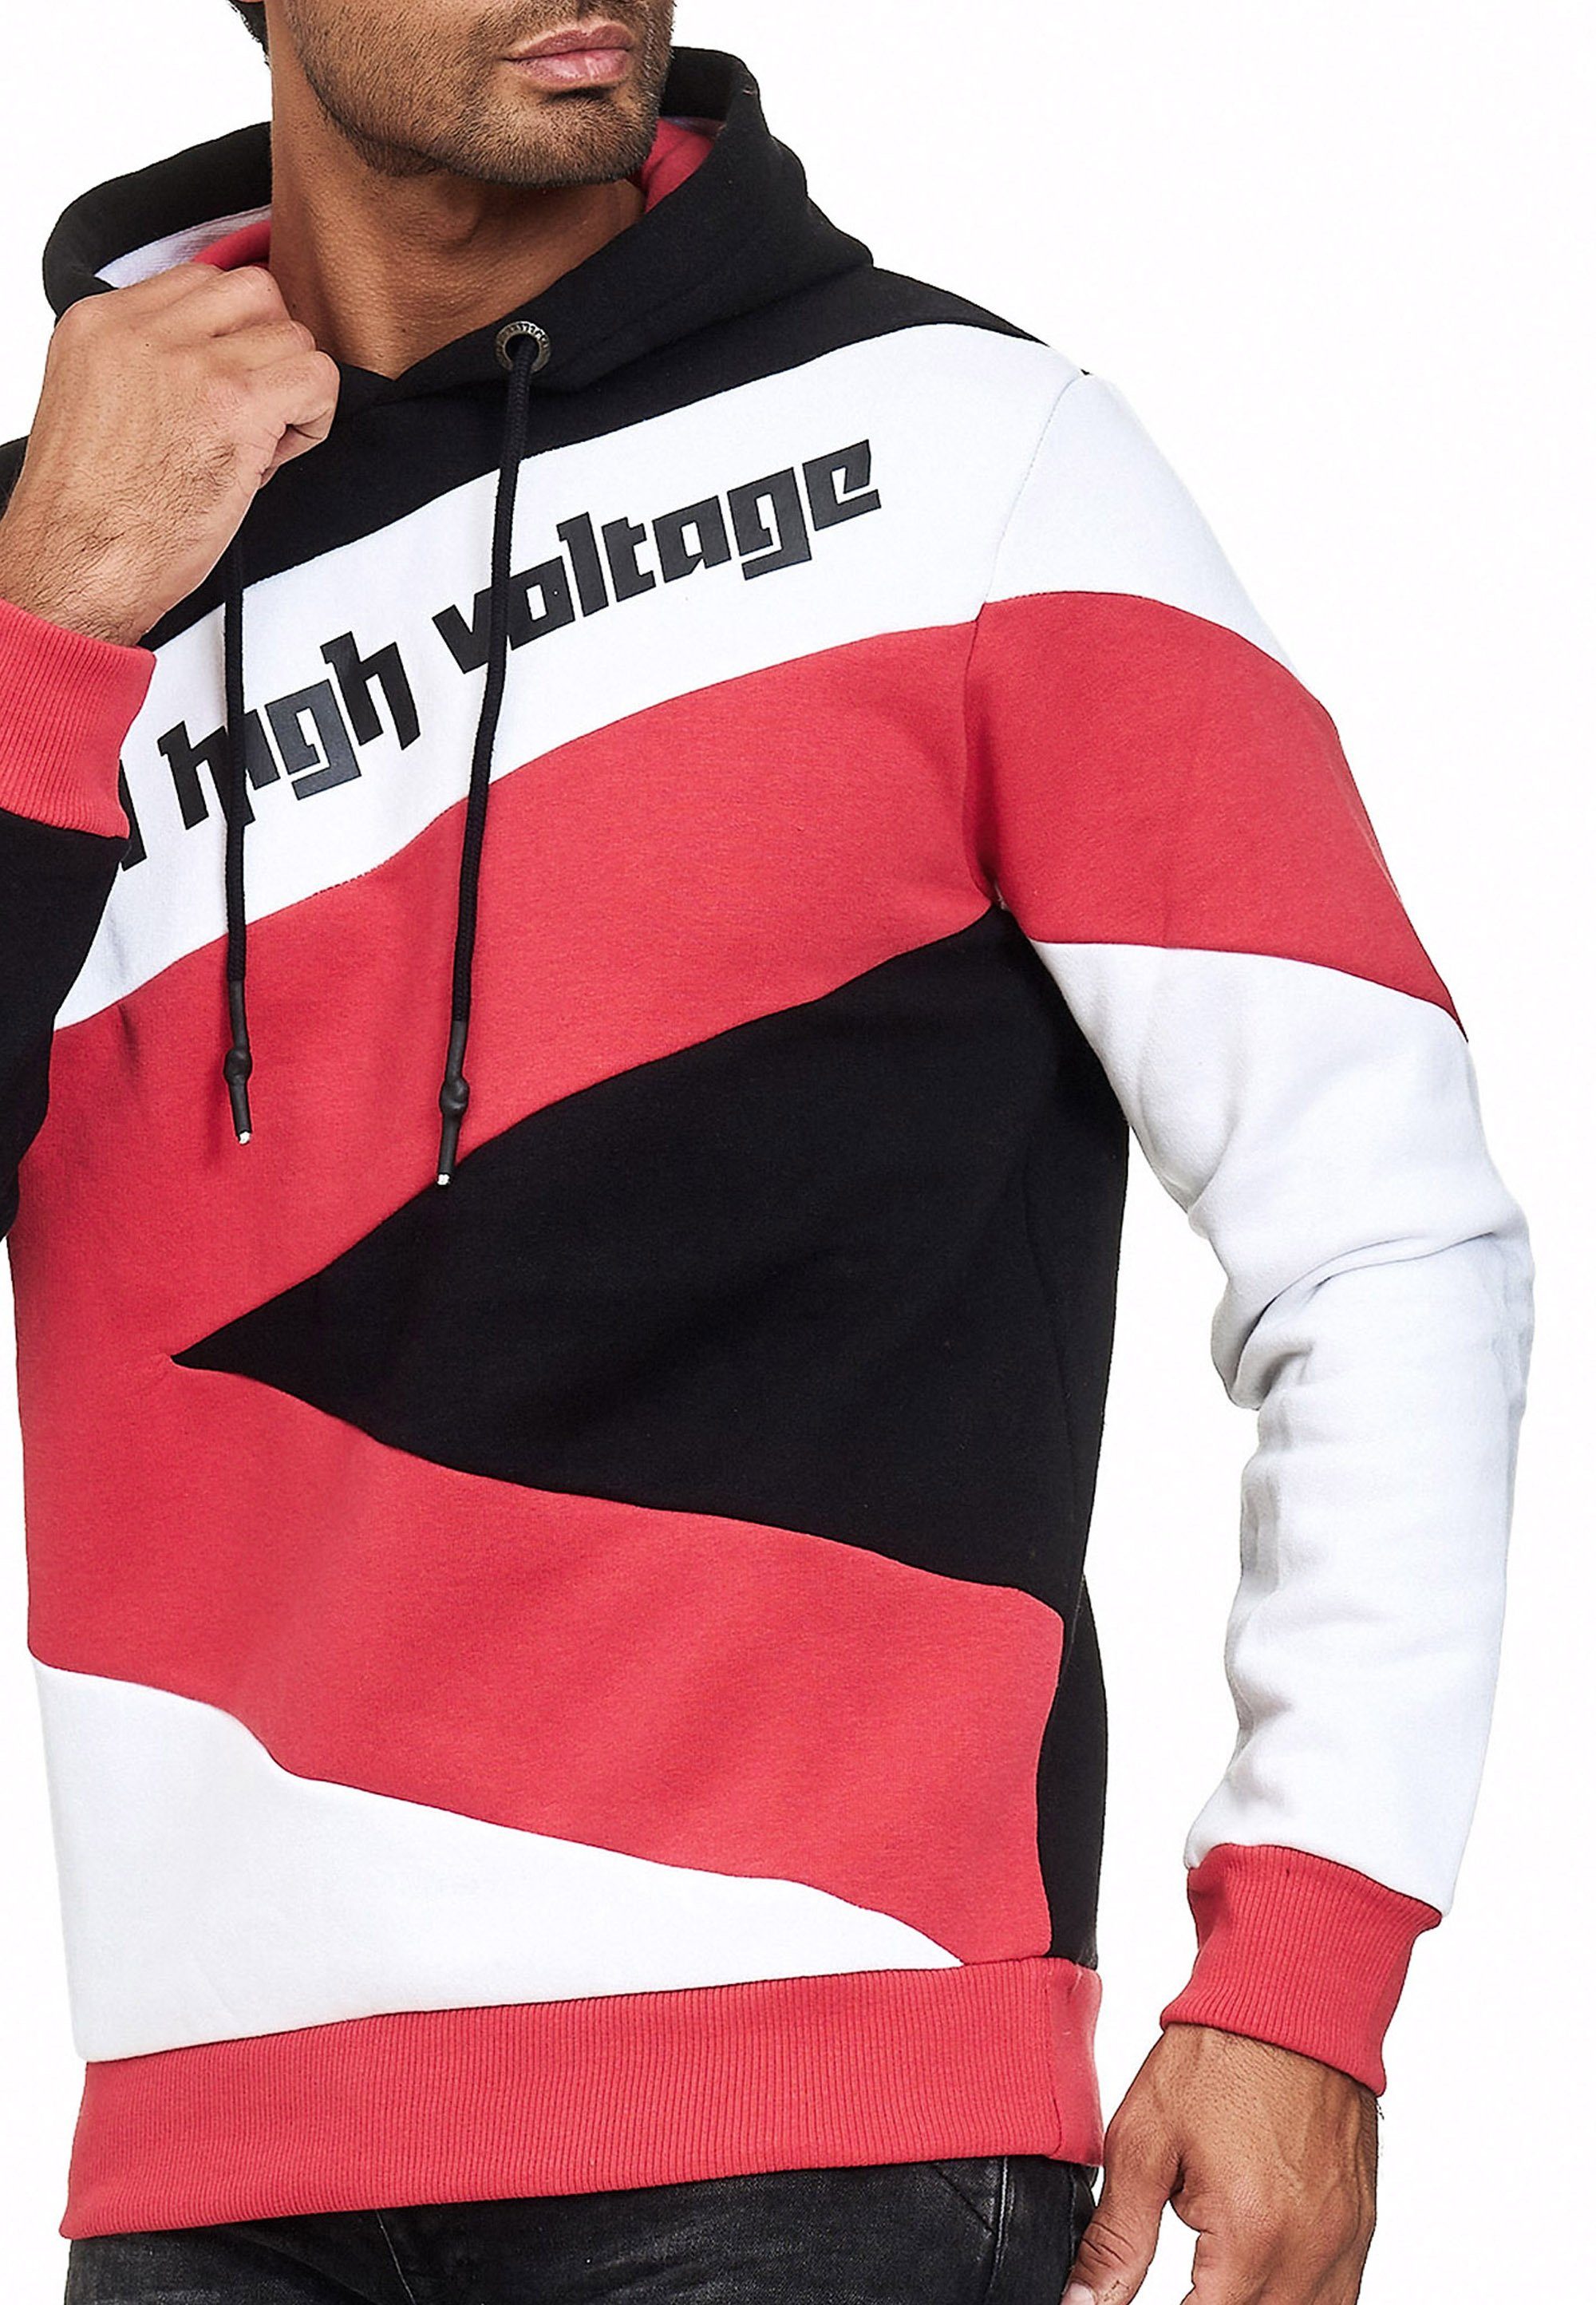 Rusty Neal Kapuzensweatshirt in schwarz-rot Design sportlichem